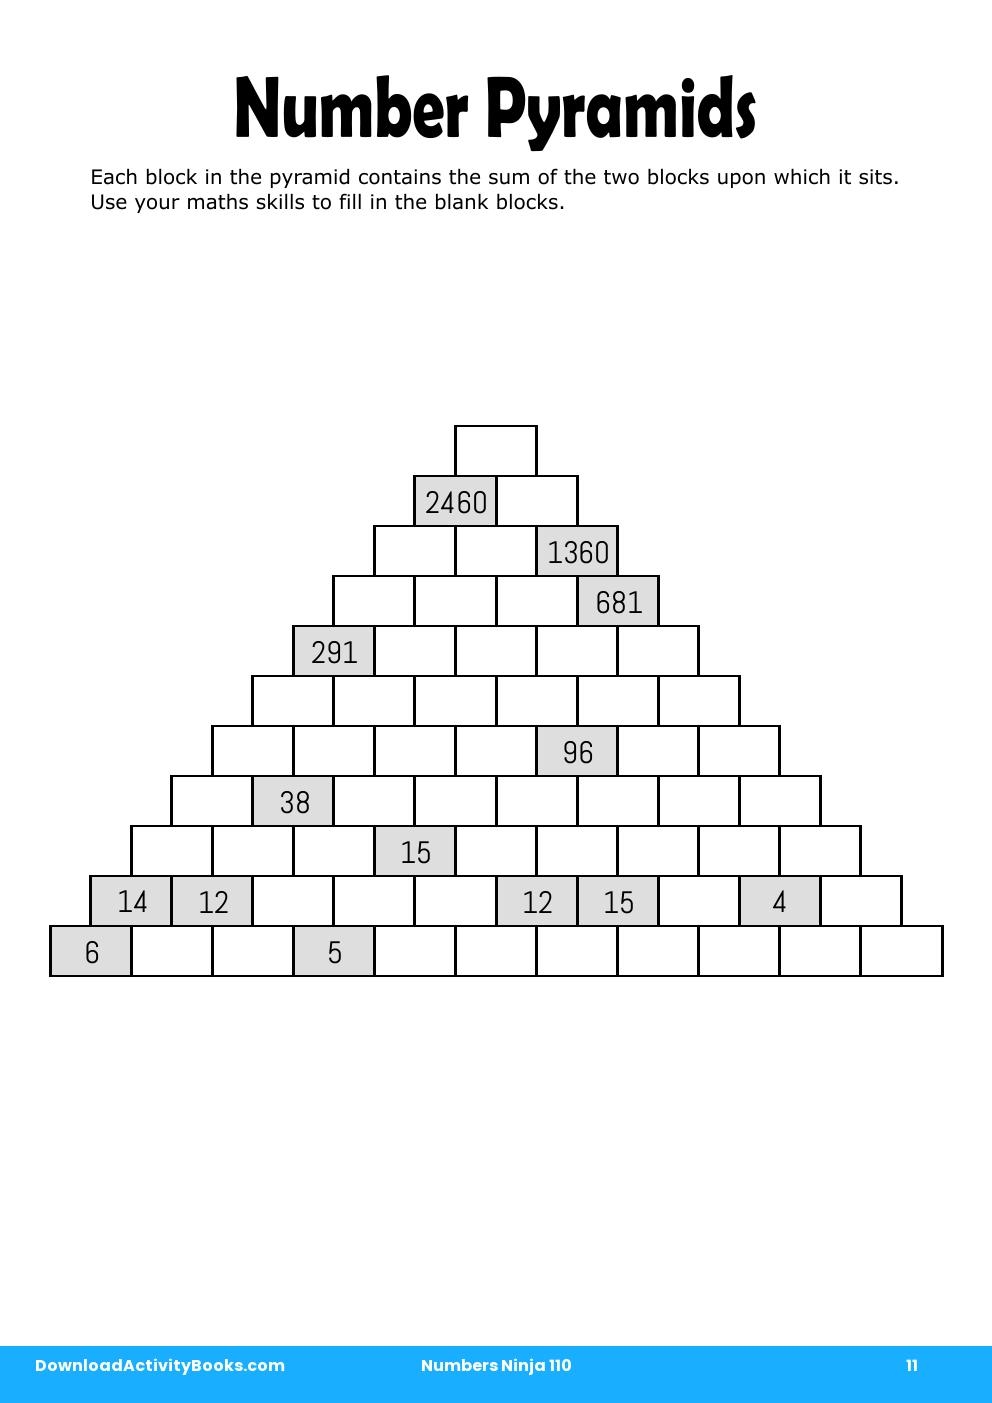 Number Pyramids in Numbers Ninja 110